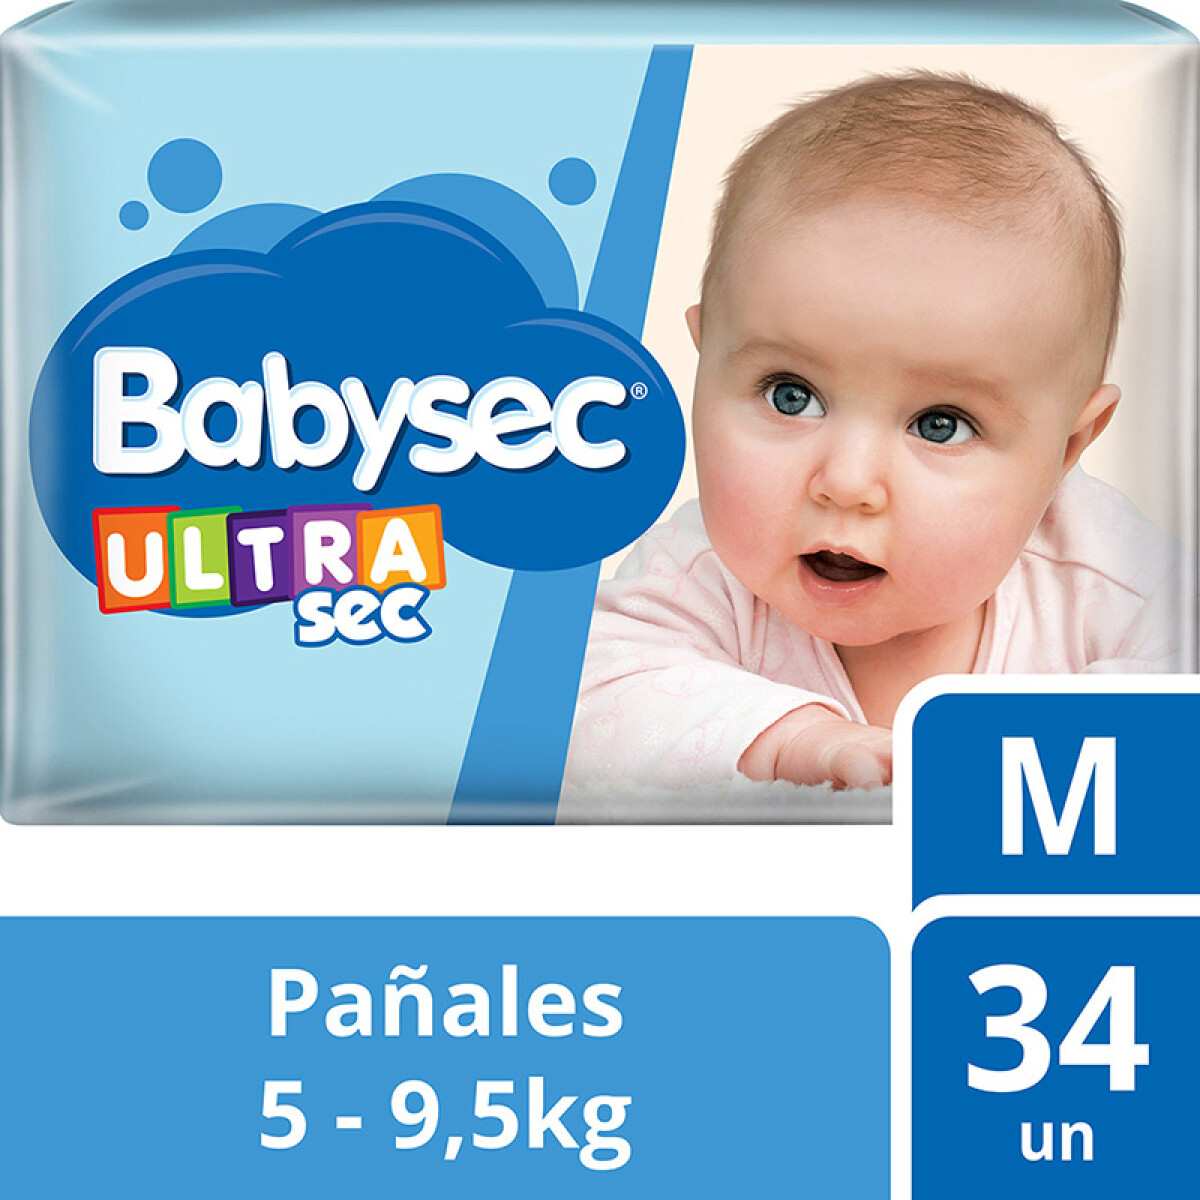 Baby Sec pañales Ultra Sec - Mx34 